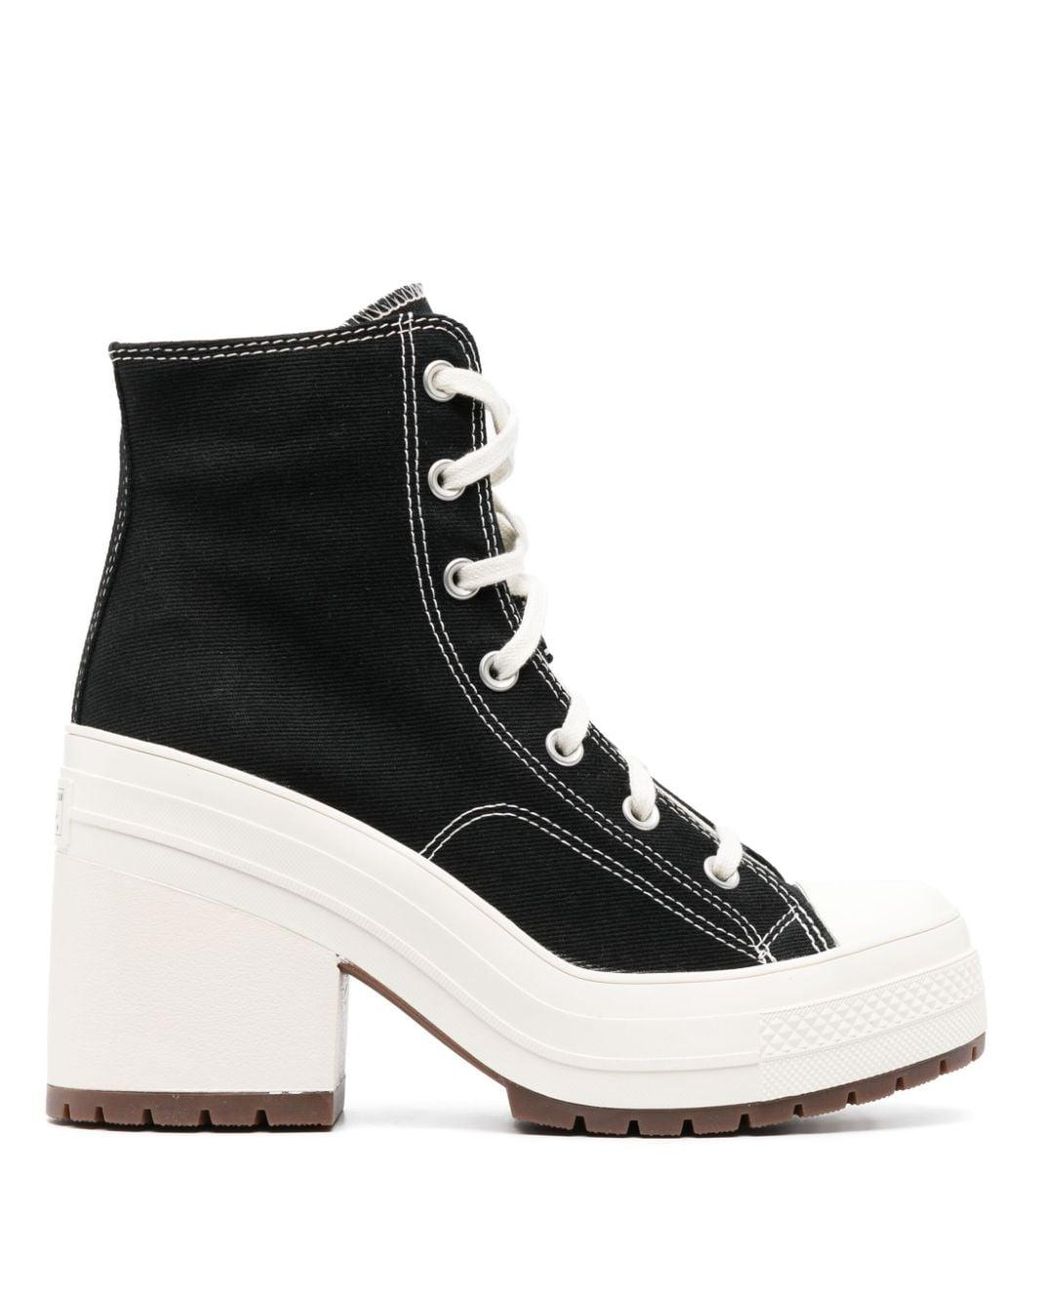 Converse Chuck 70 De Luxe Heeled Sneakers in Black | Lyst